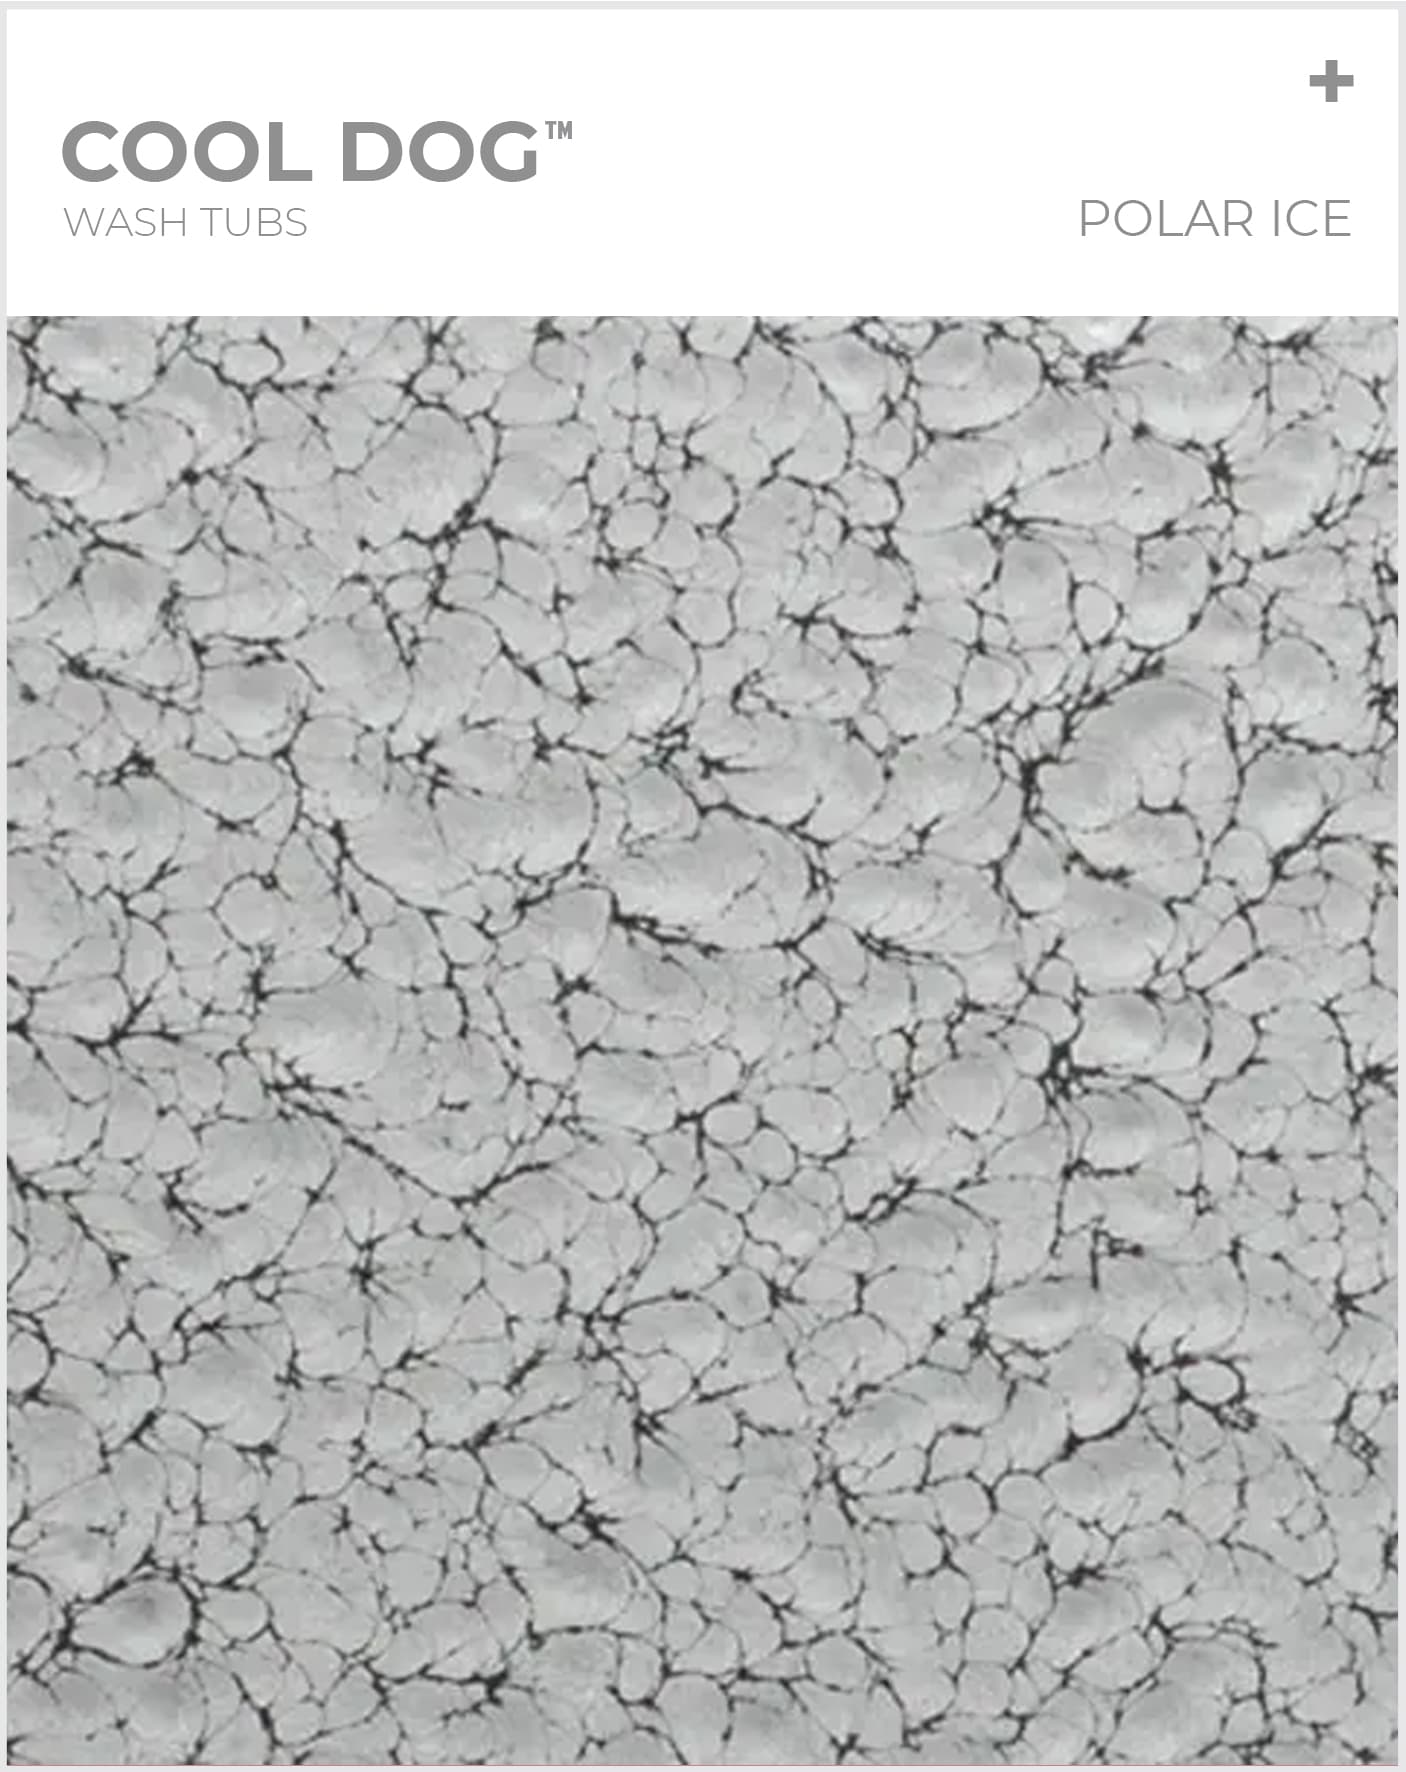 Cool Dog Wash Tubs - Polar Ice